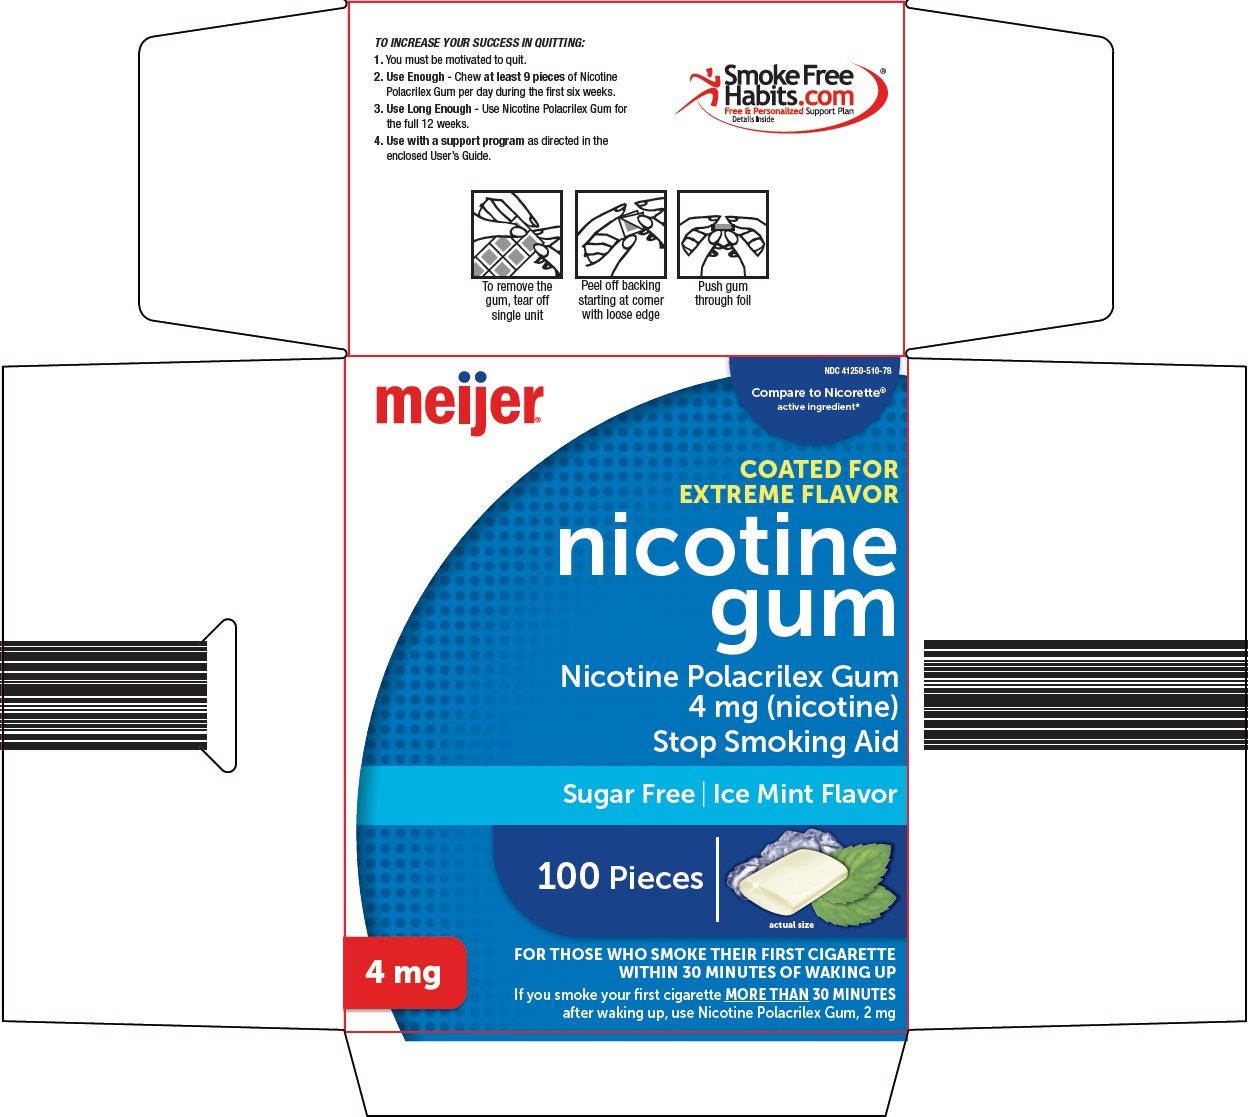 309-6e-nicotine-gum-1.jpg